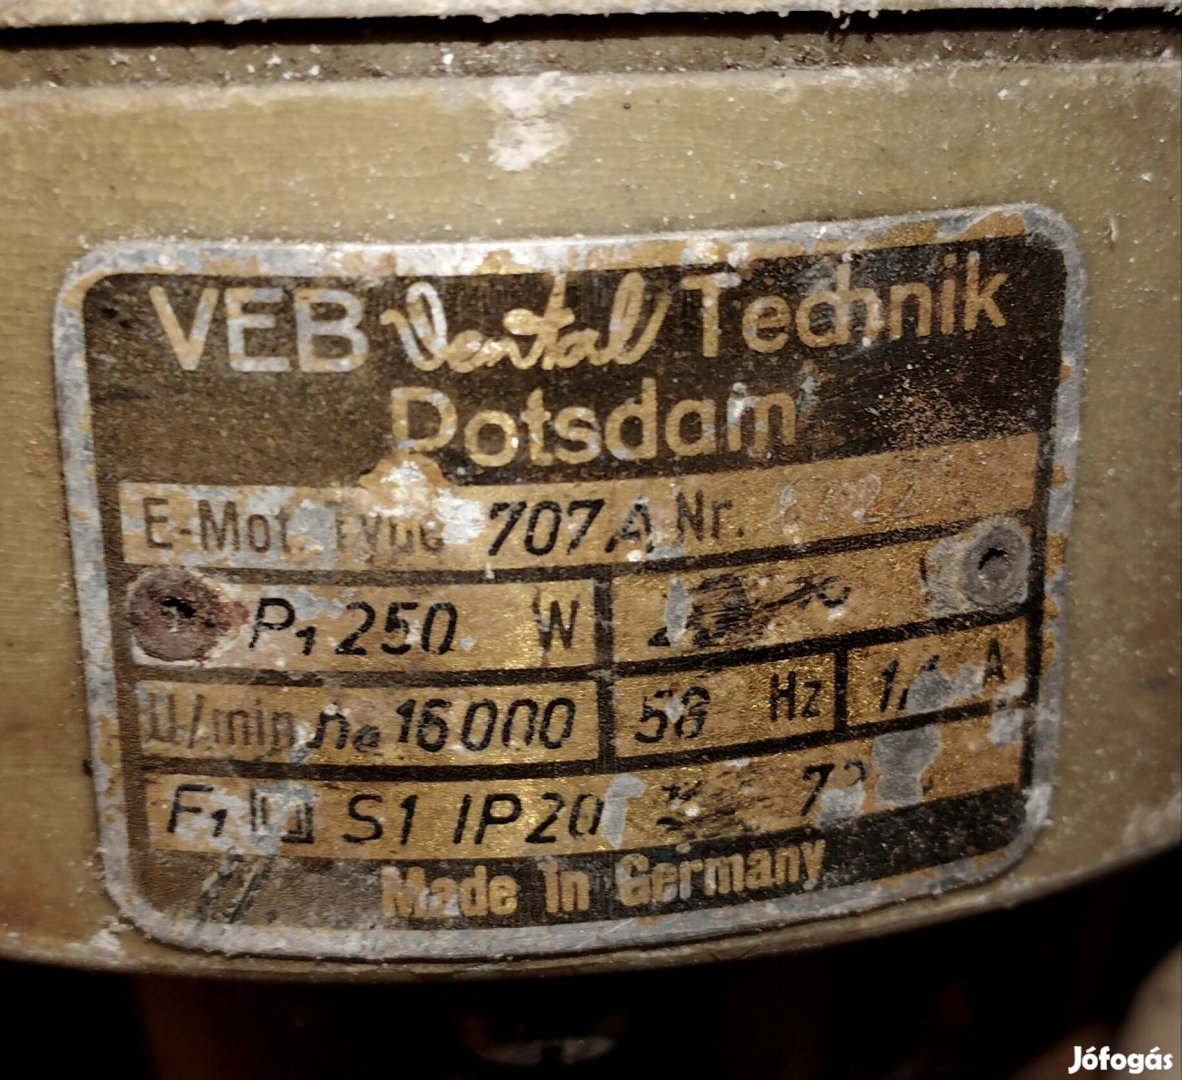 VEB Dentaltechnik Potsdam 707a 1970 fogorvosi fúró